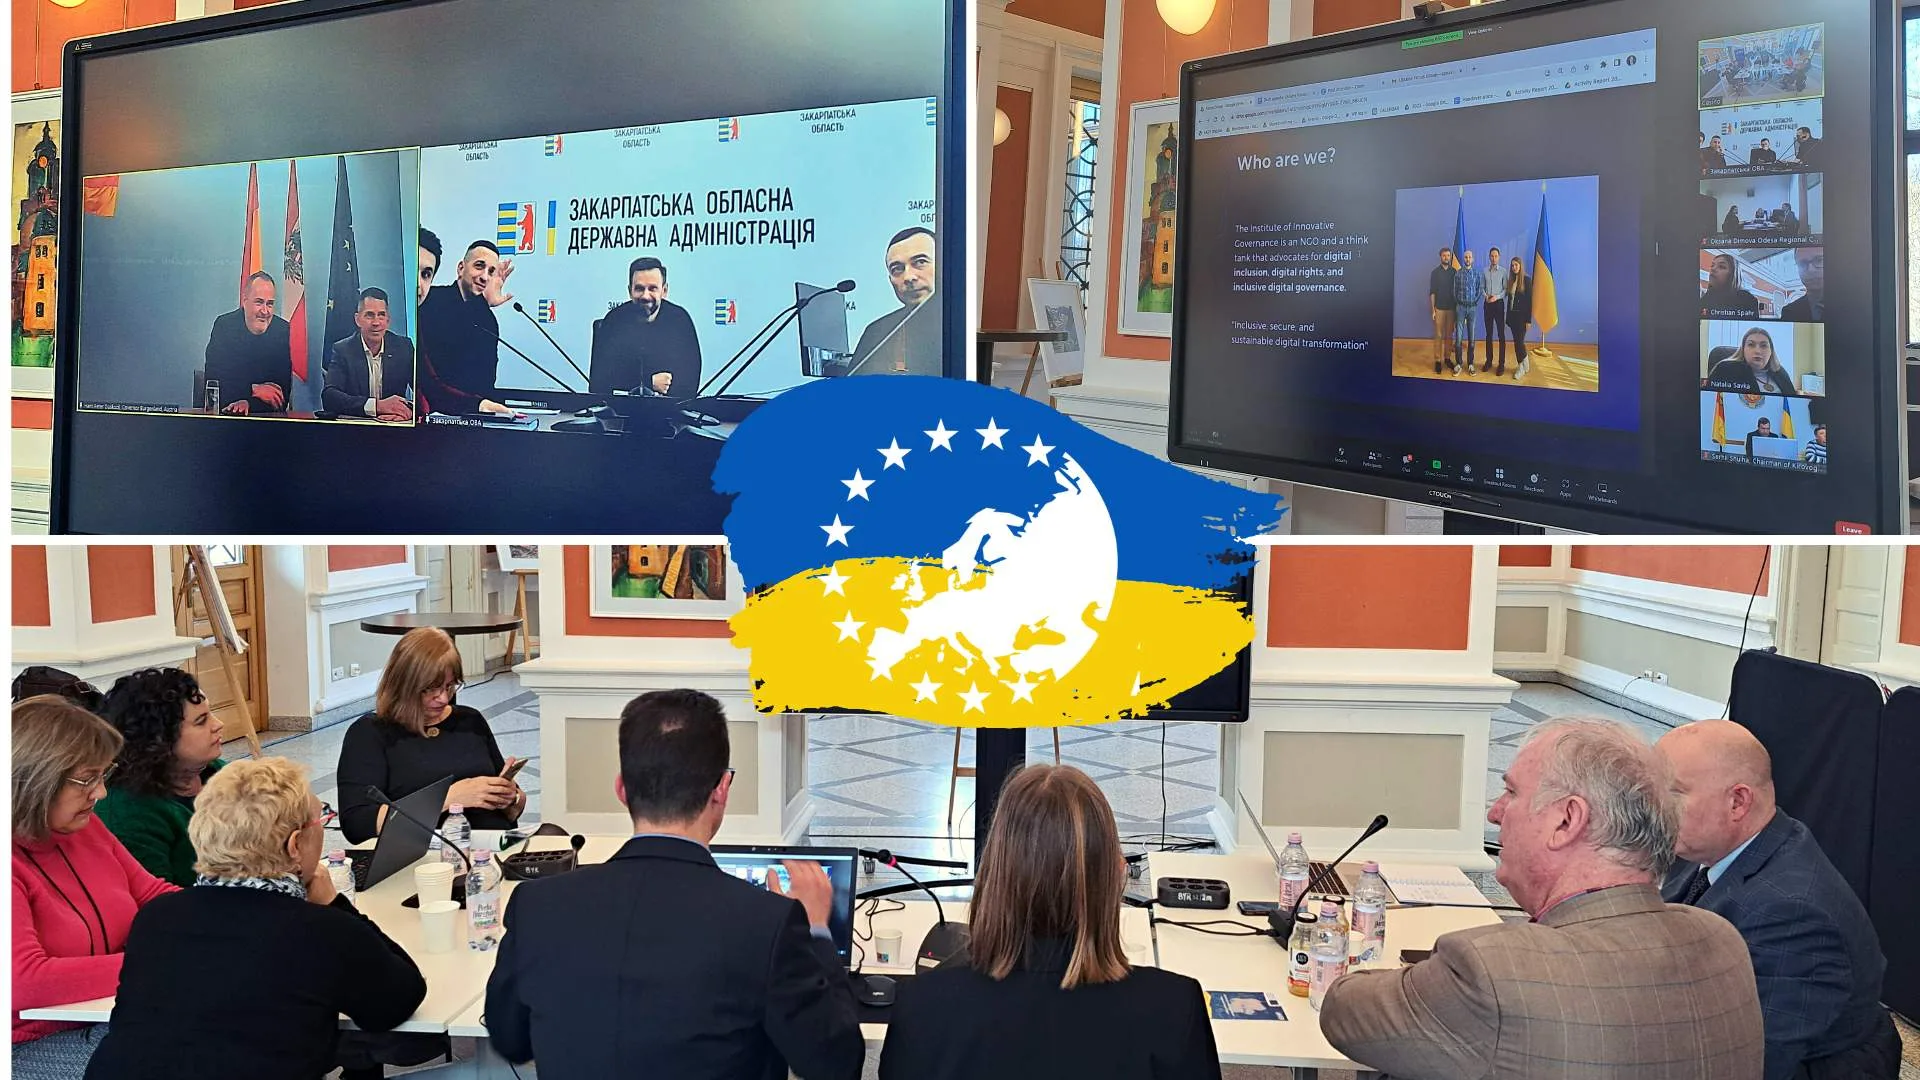 Second Meeting meeting of the Focus Group Ukraine on EU-Ukraine